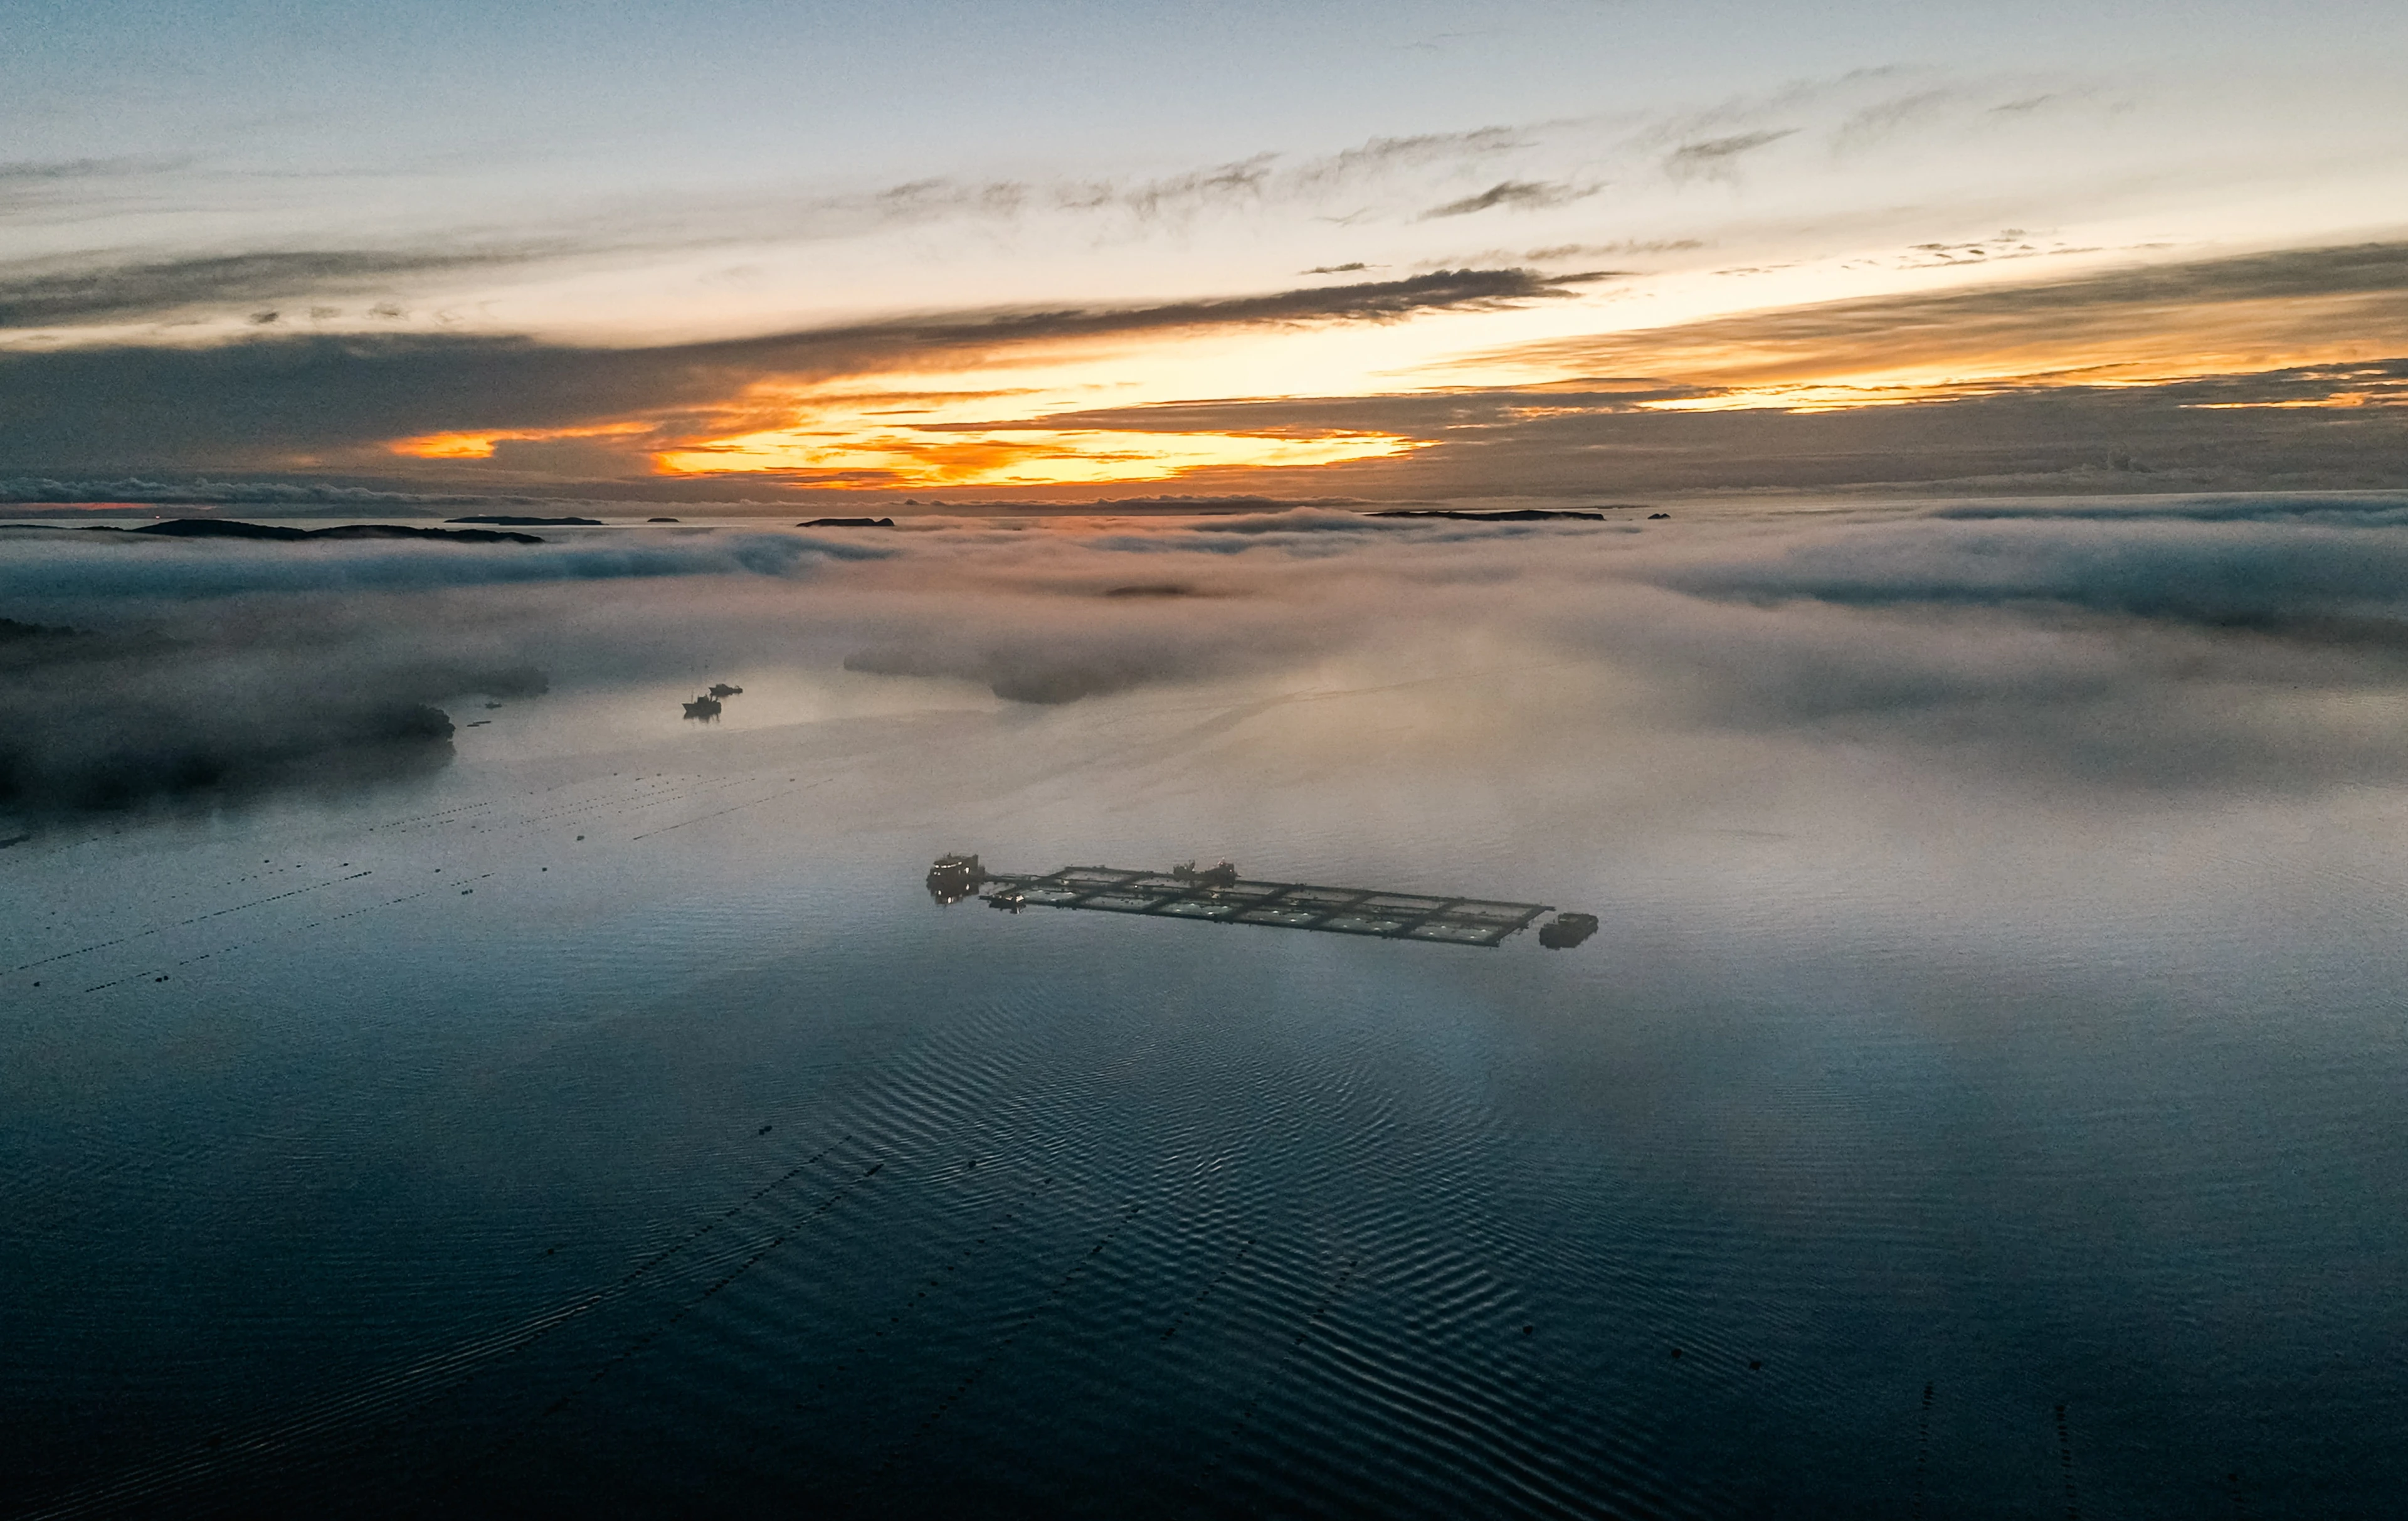 Big Glory Bay Salmon Farm at Dawn